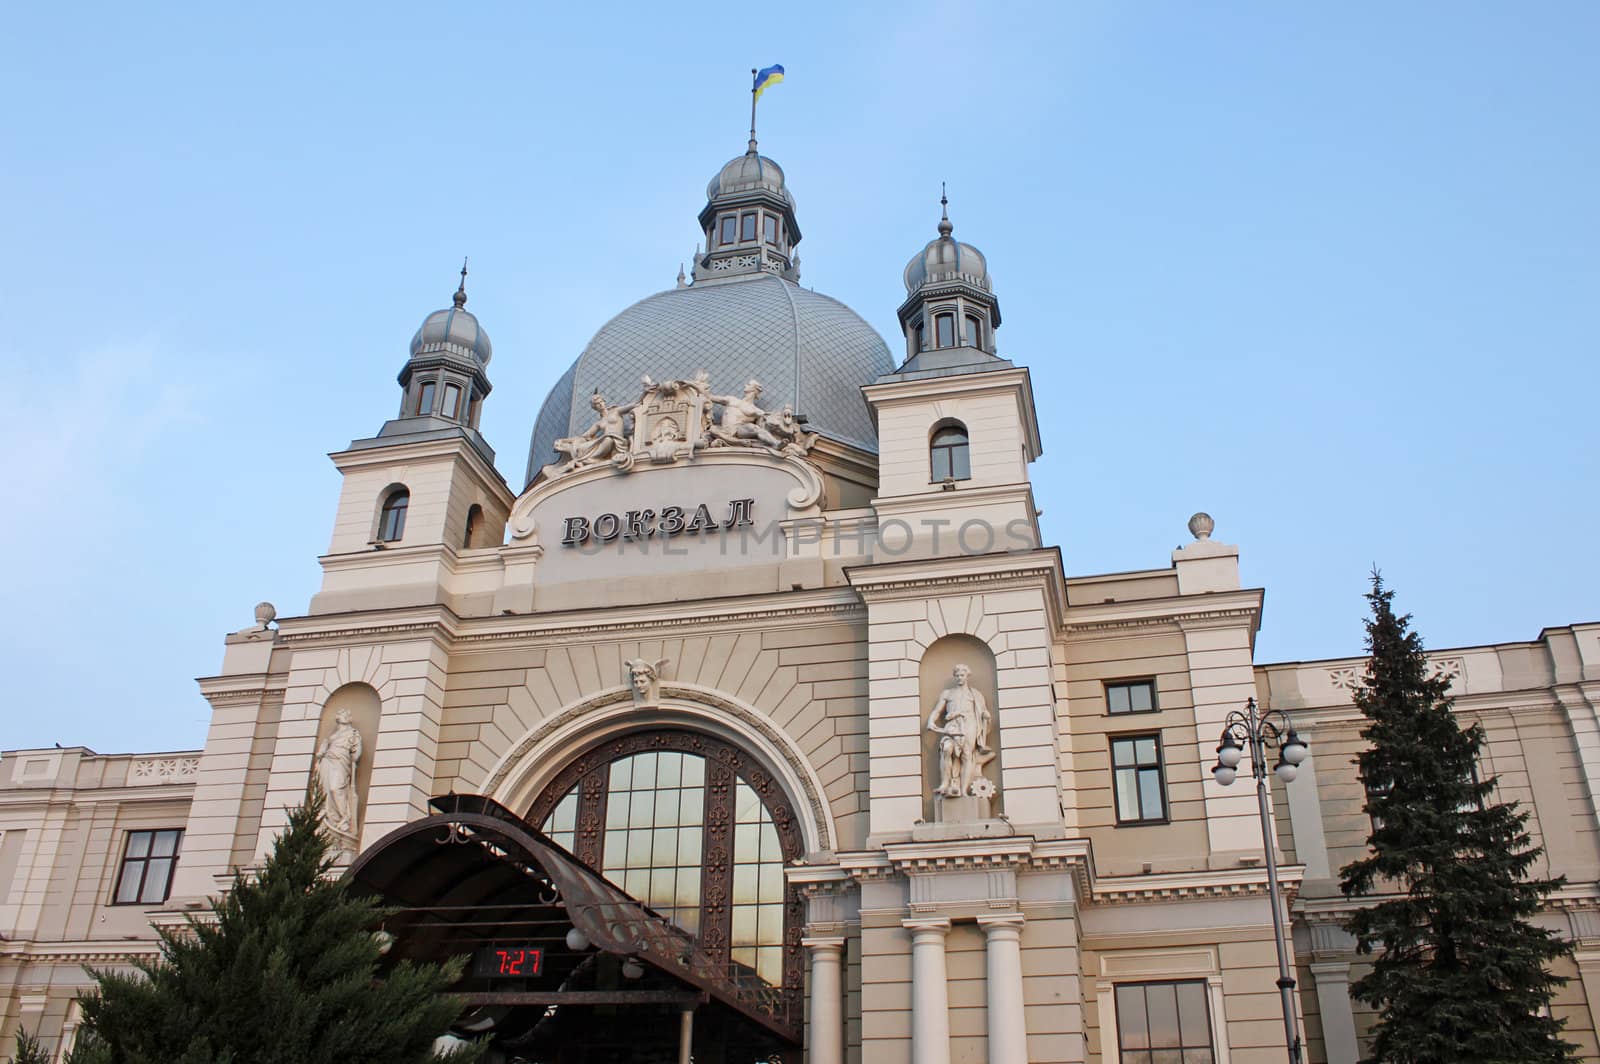 railway station in Lviv